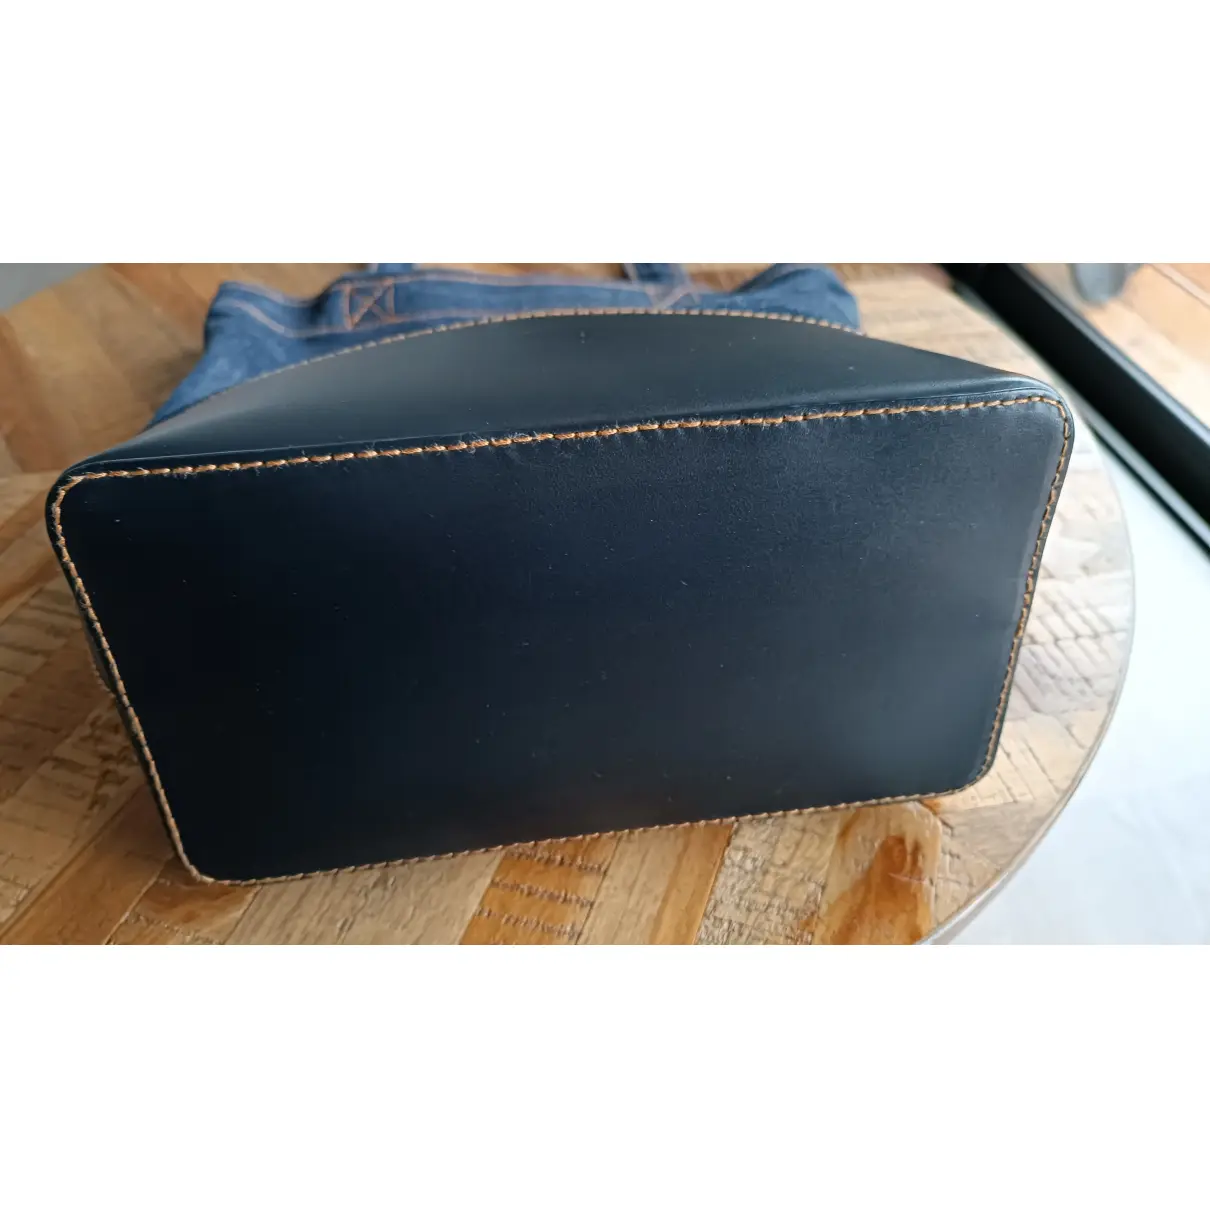 Leather handbag APC